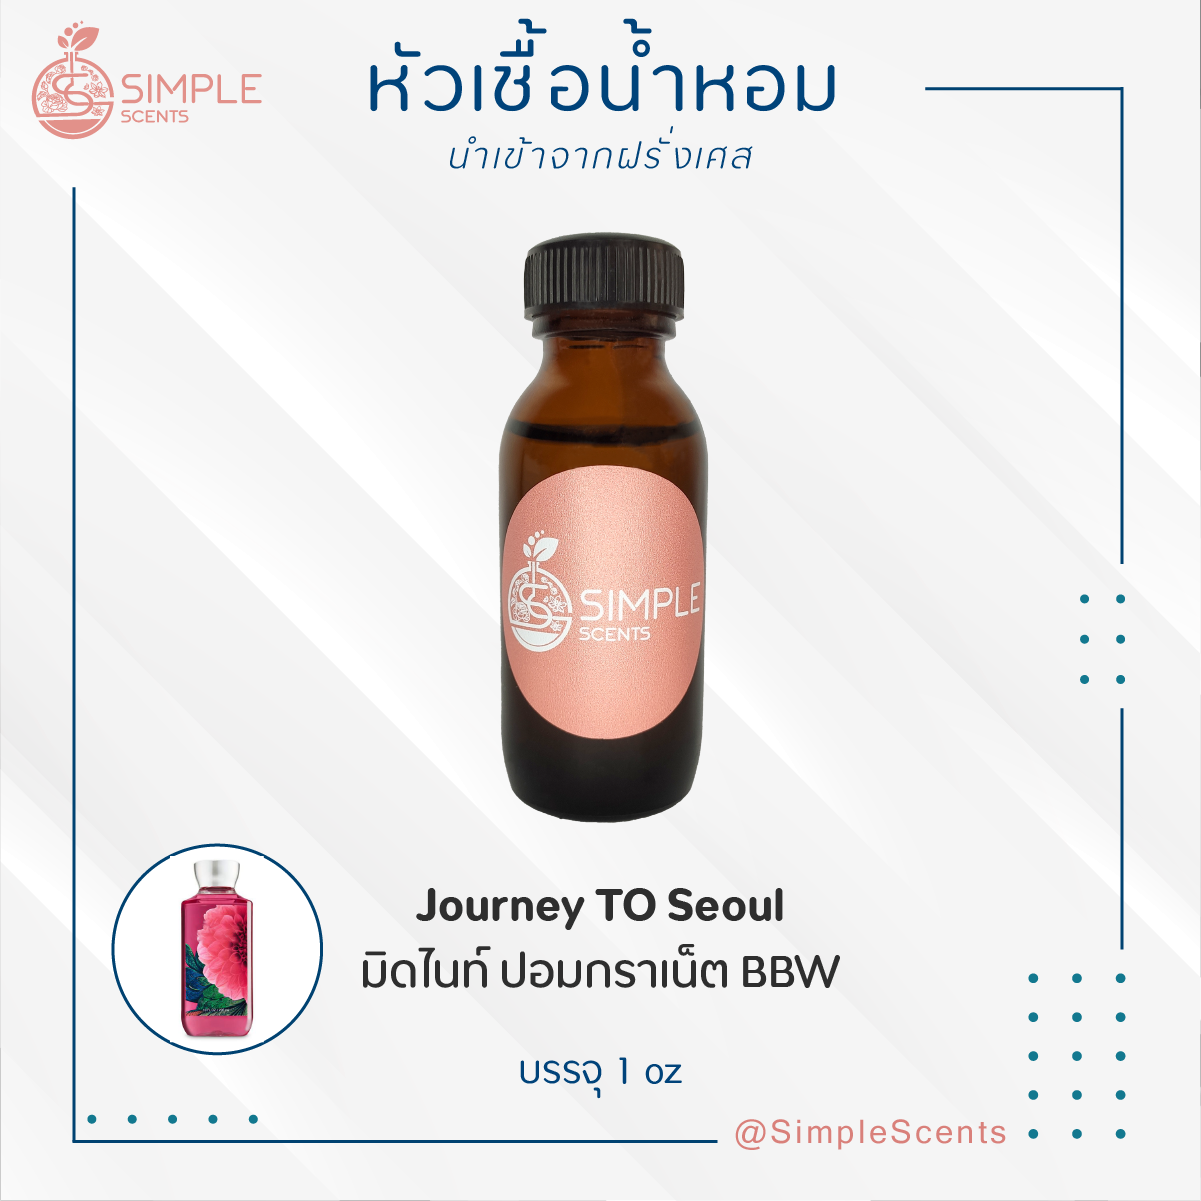 Journey TO Seoul / มิดไนท์ ปอม